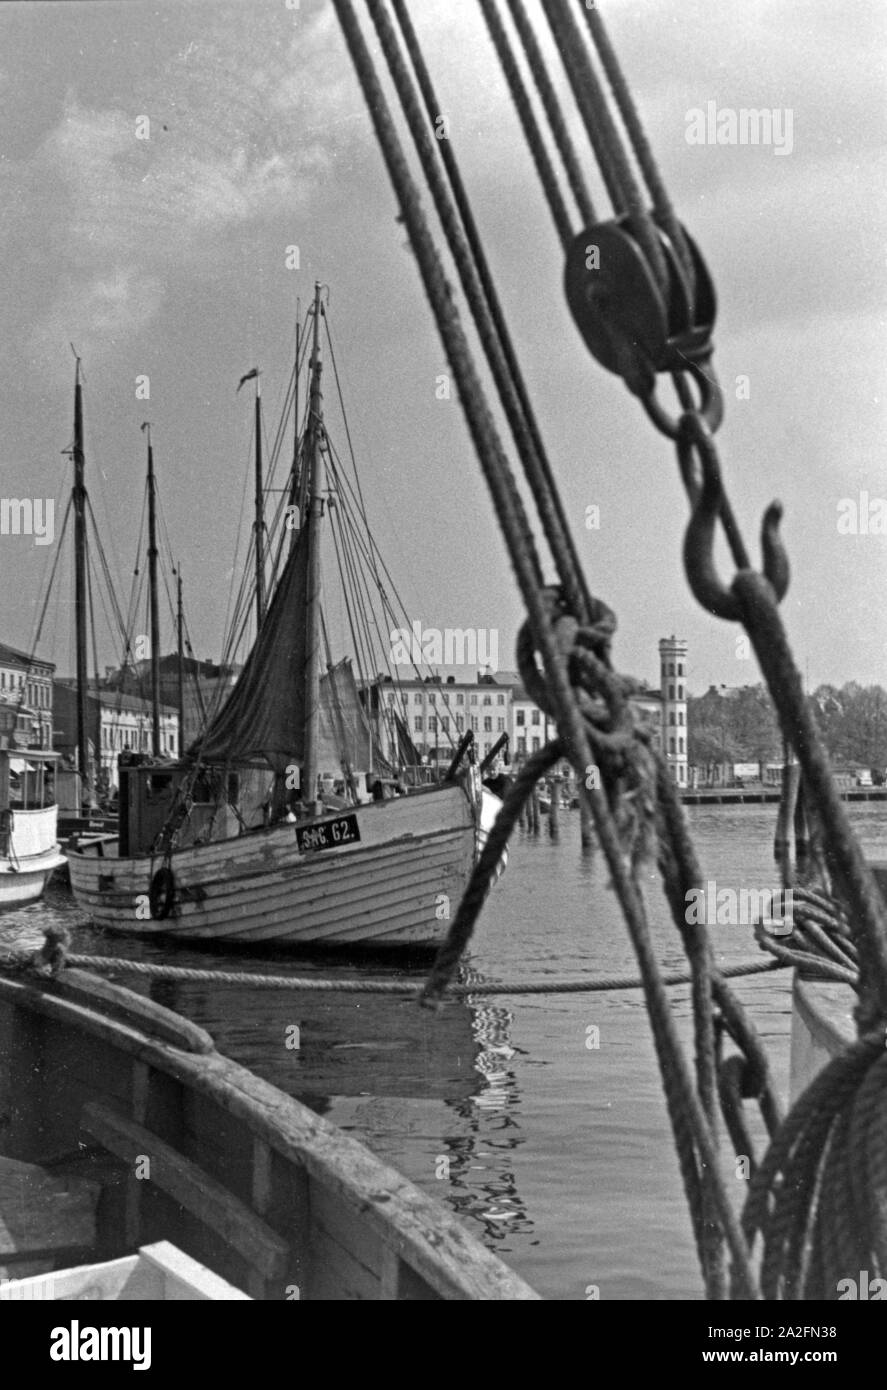 Fischerboote im Hafen, Deuitschland 1930er Jahre. Barcos de pesca en el puerto, Alemania 1930. Foto de stock